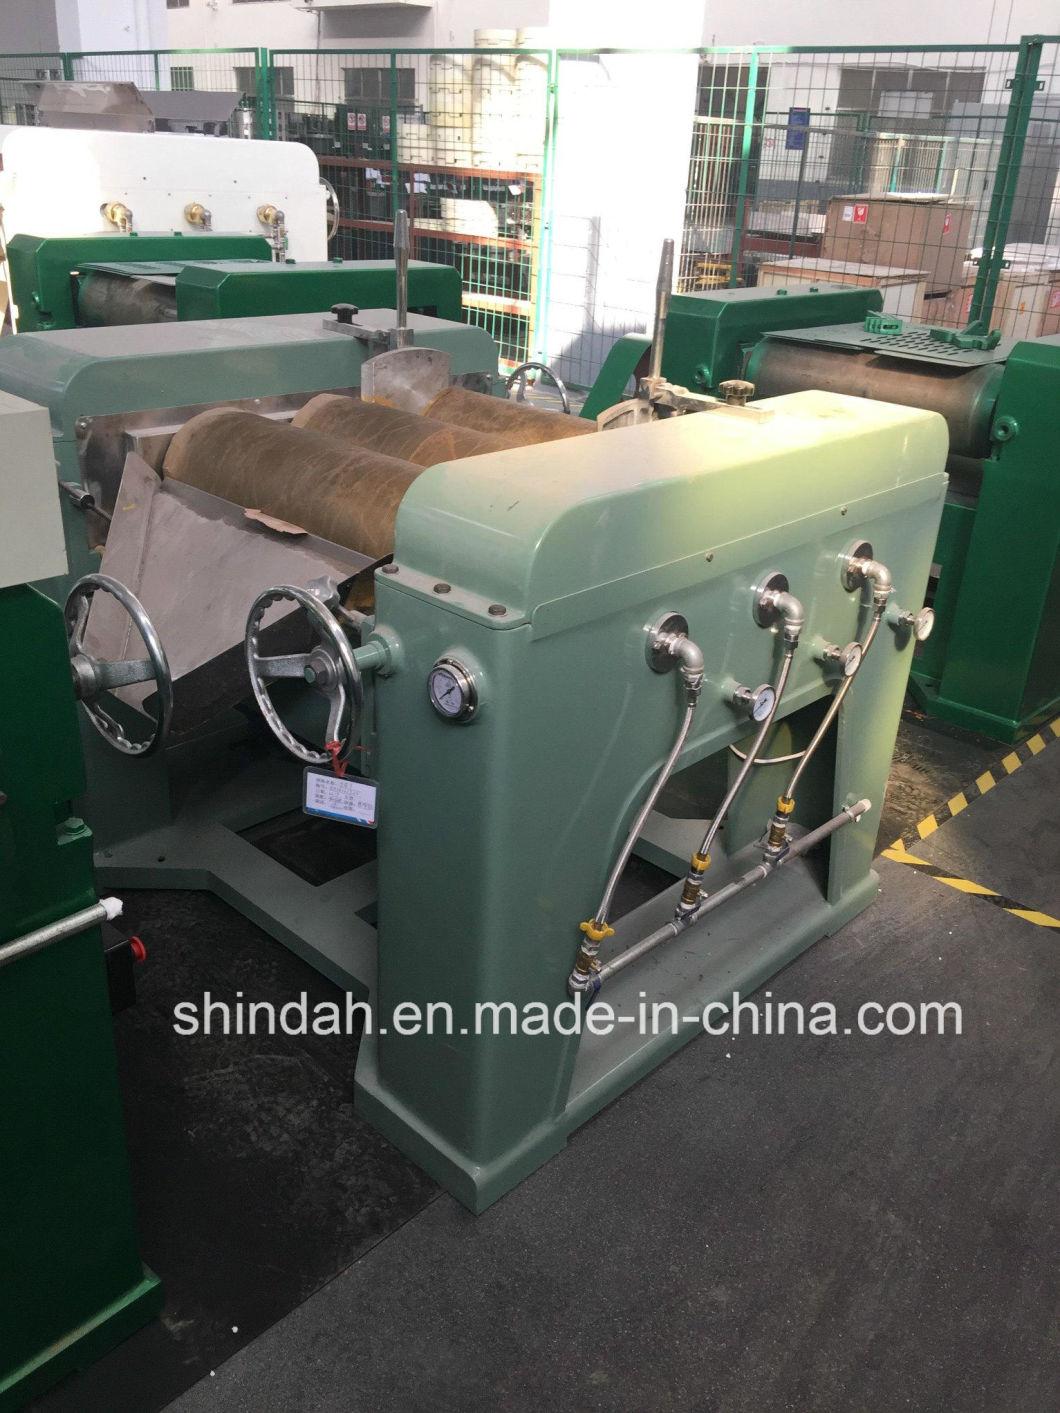 Hot Sale Three Roller Mill of Shindah Brand